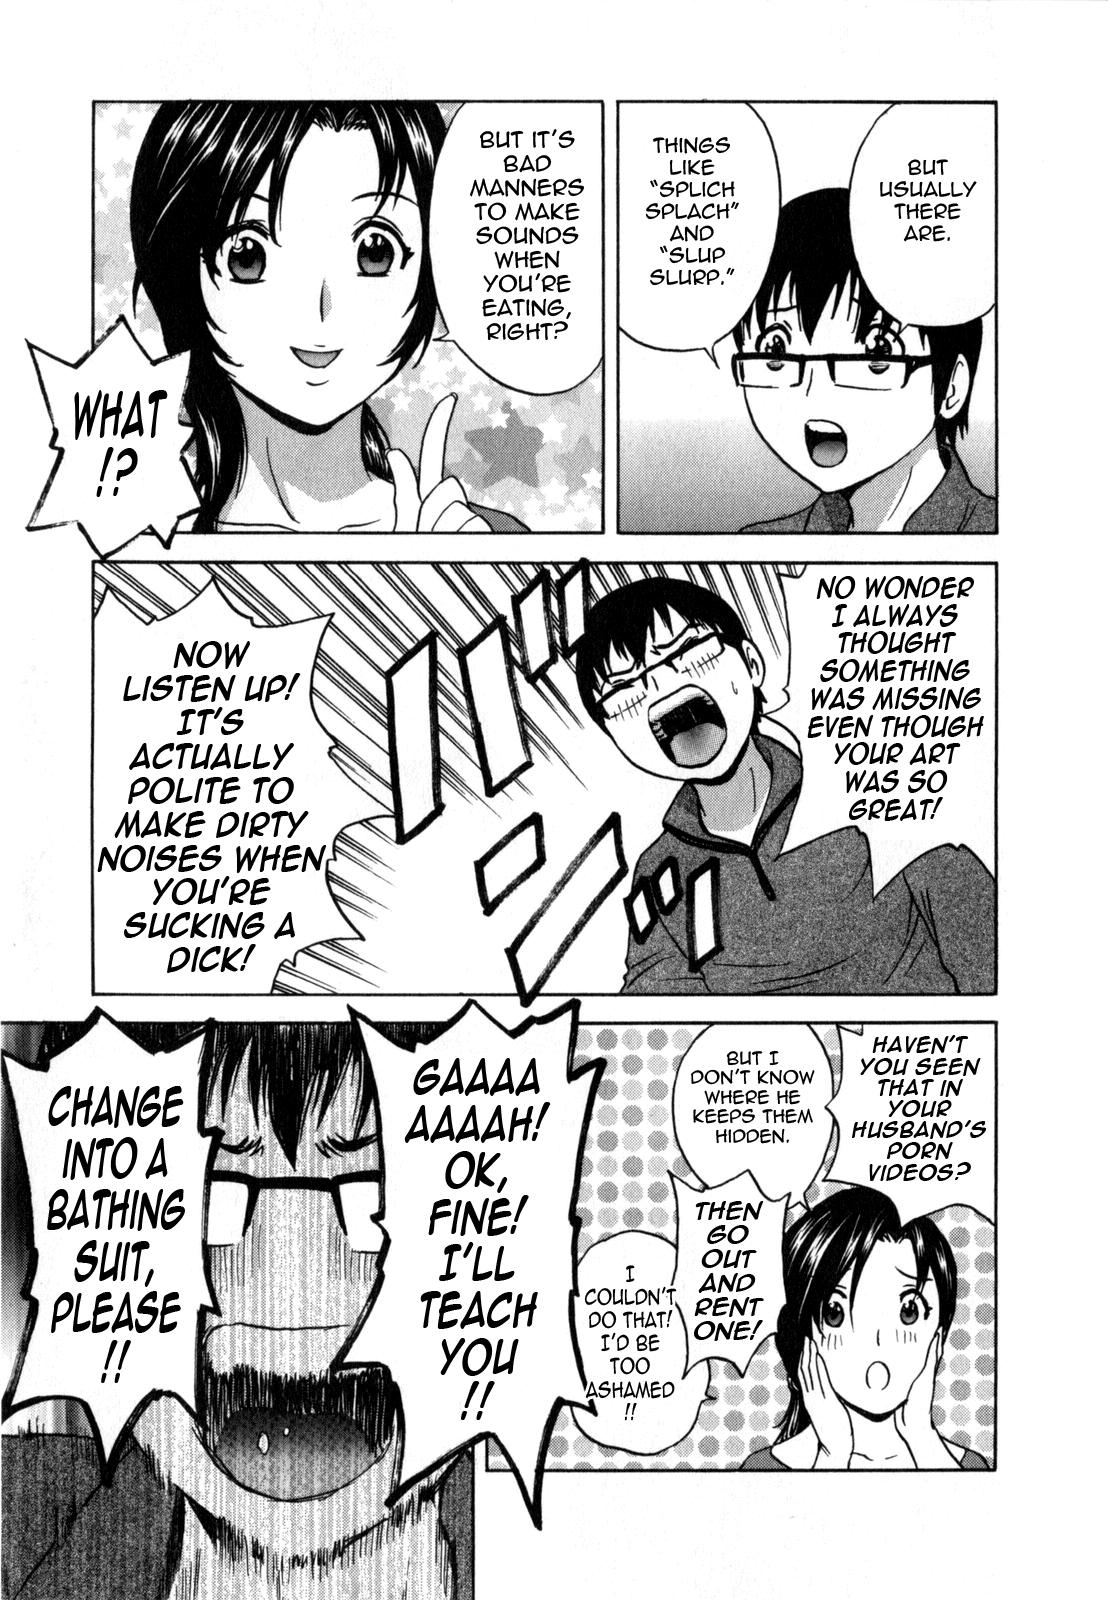 [Hidemaru] Life with Married Women Just Like a Manga 1 - Ch. 1-3 [English] {Tadanohito} 15